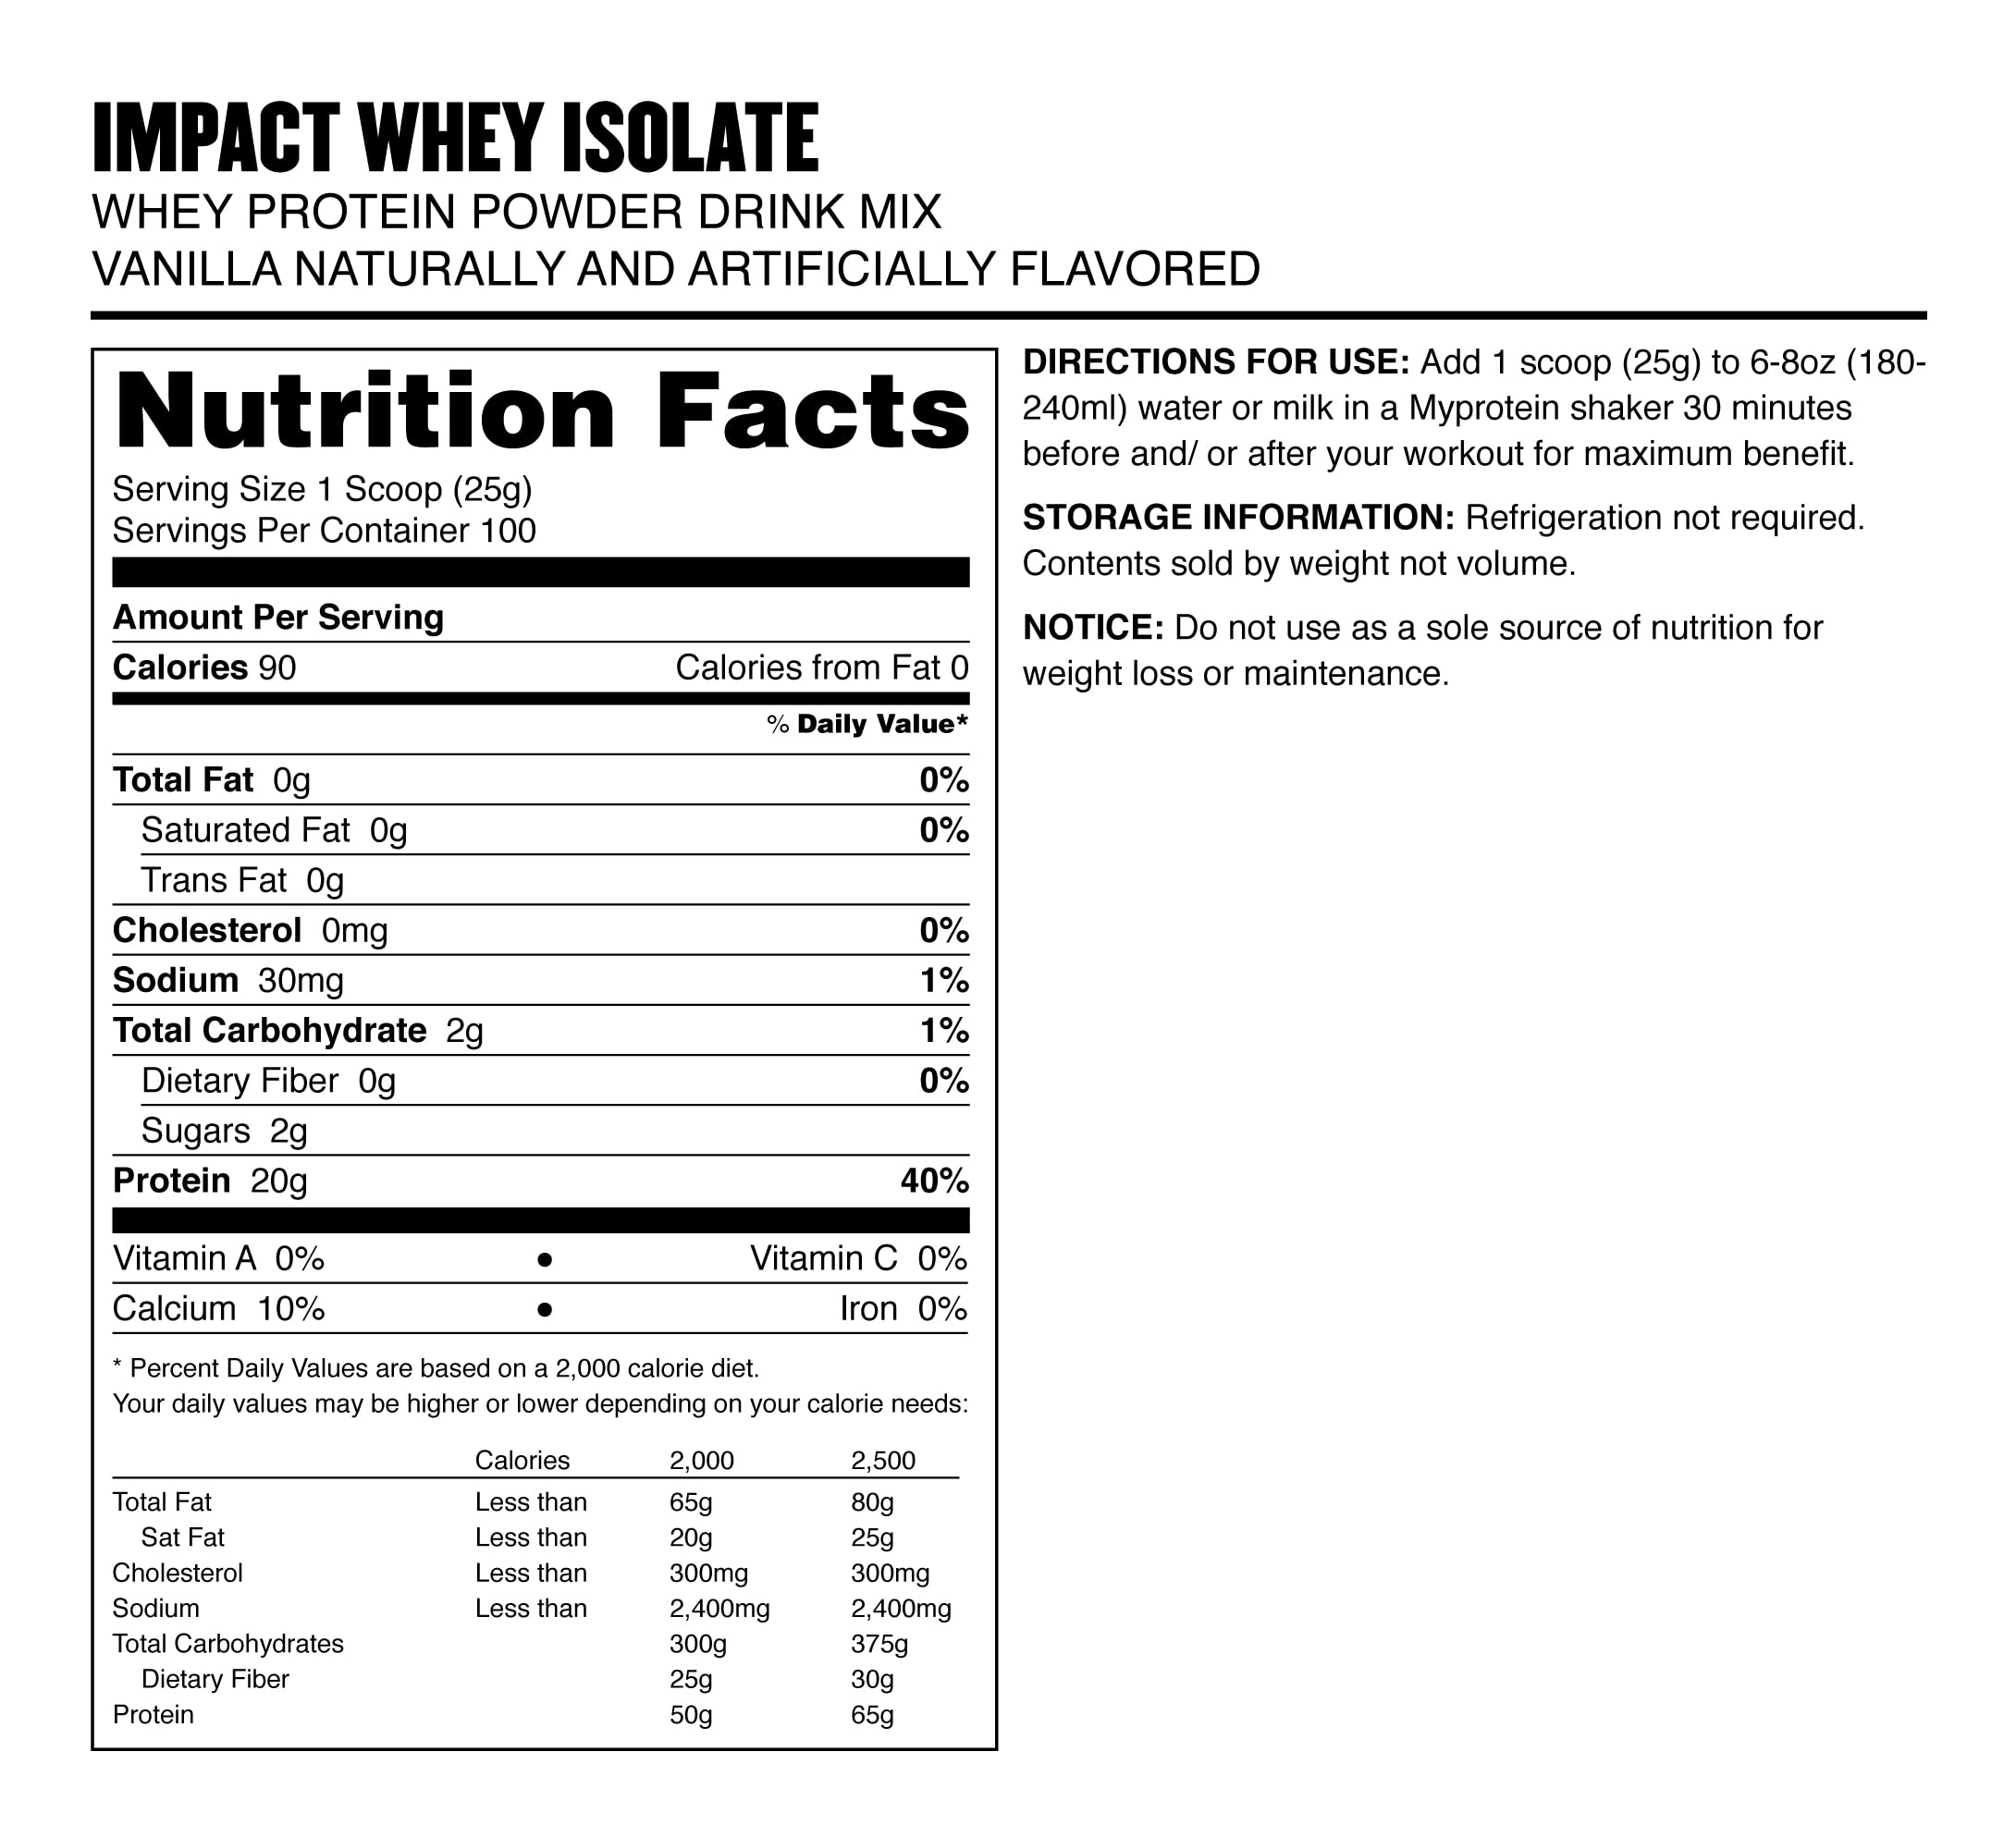 Myprotein Impact Whey Isolate powder - Vanilla 5.5 lbs. (100 Servings)